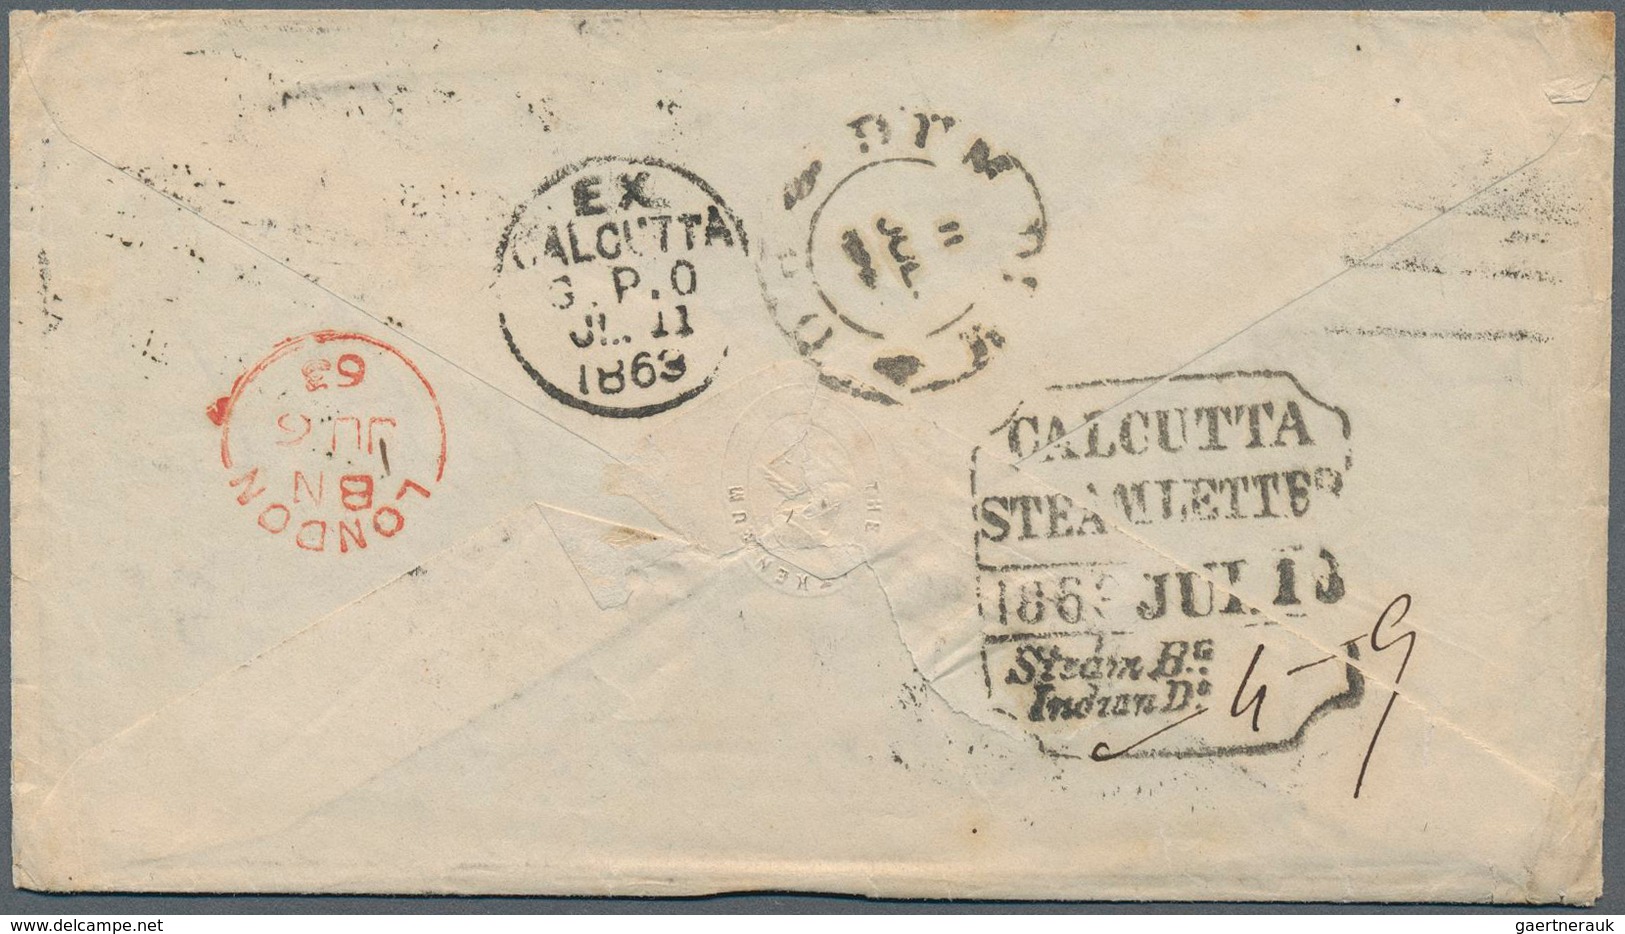 Indien: 1863 "CALCUTTA/STEAMLETTER/1863 JUL 10/Steam Bg./Indian Do." Framed Ship Letter Receipt Date - 1852 Sind Province